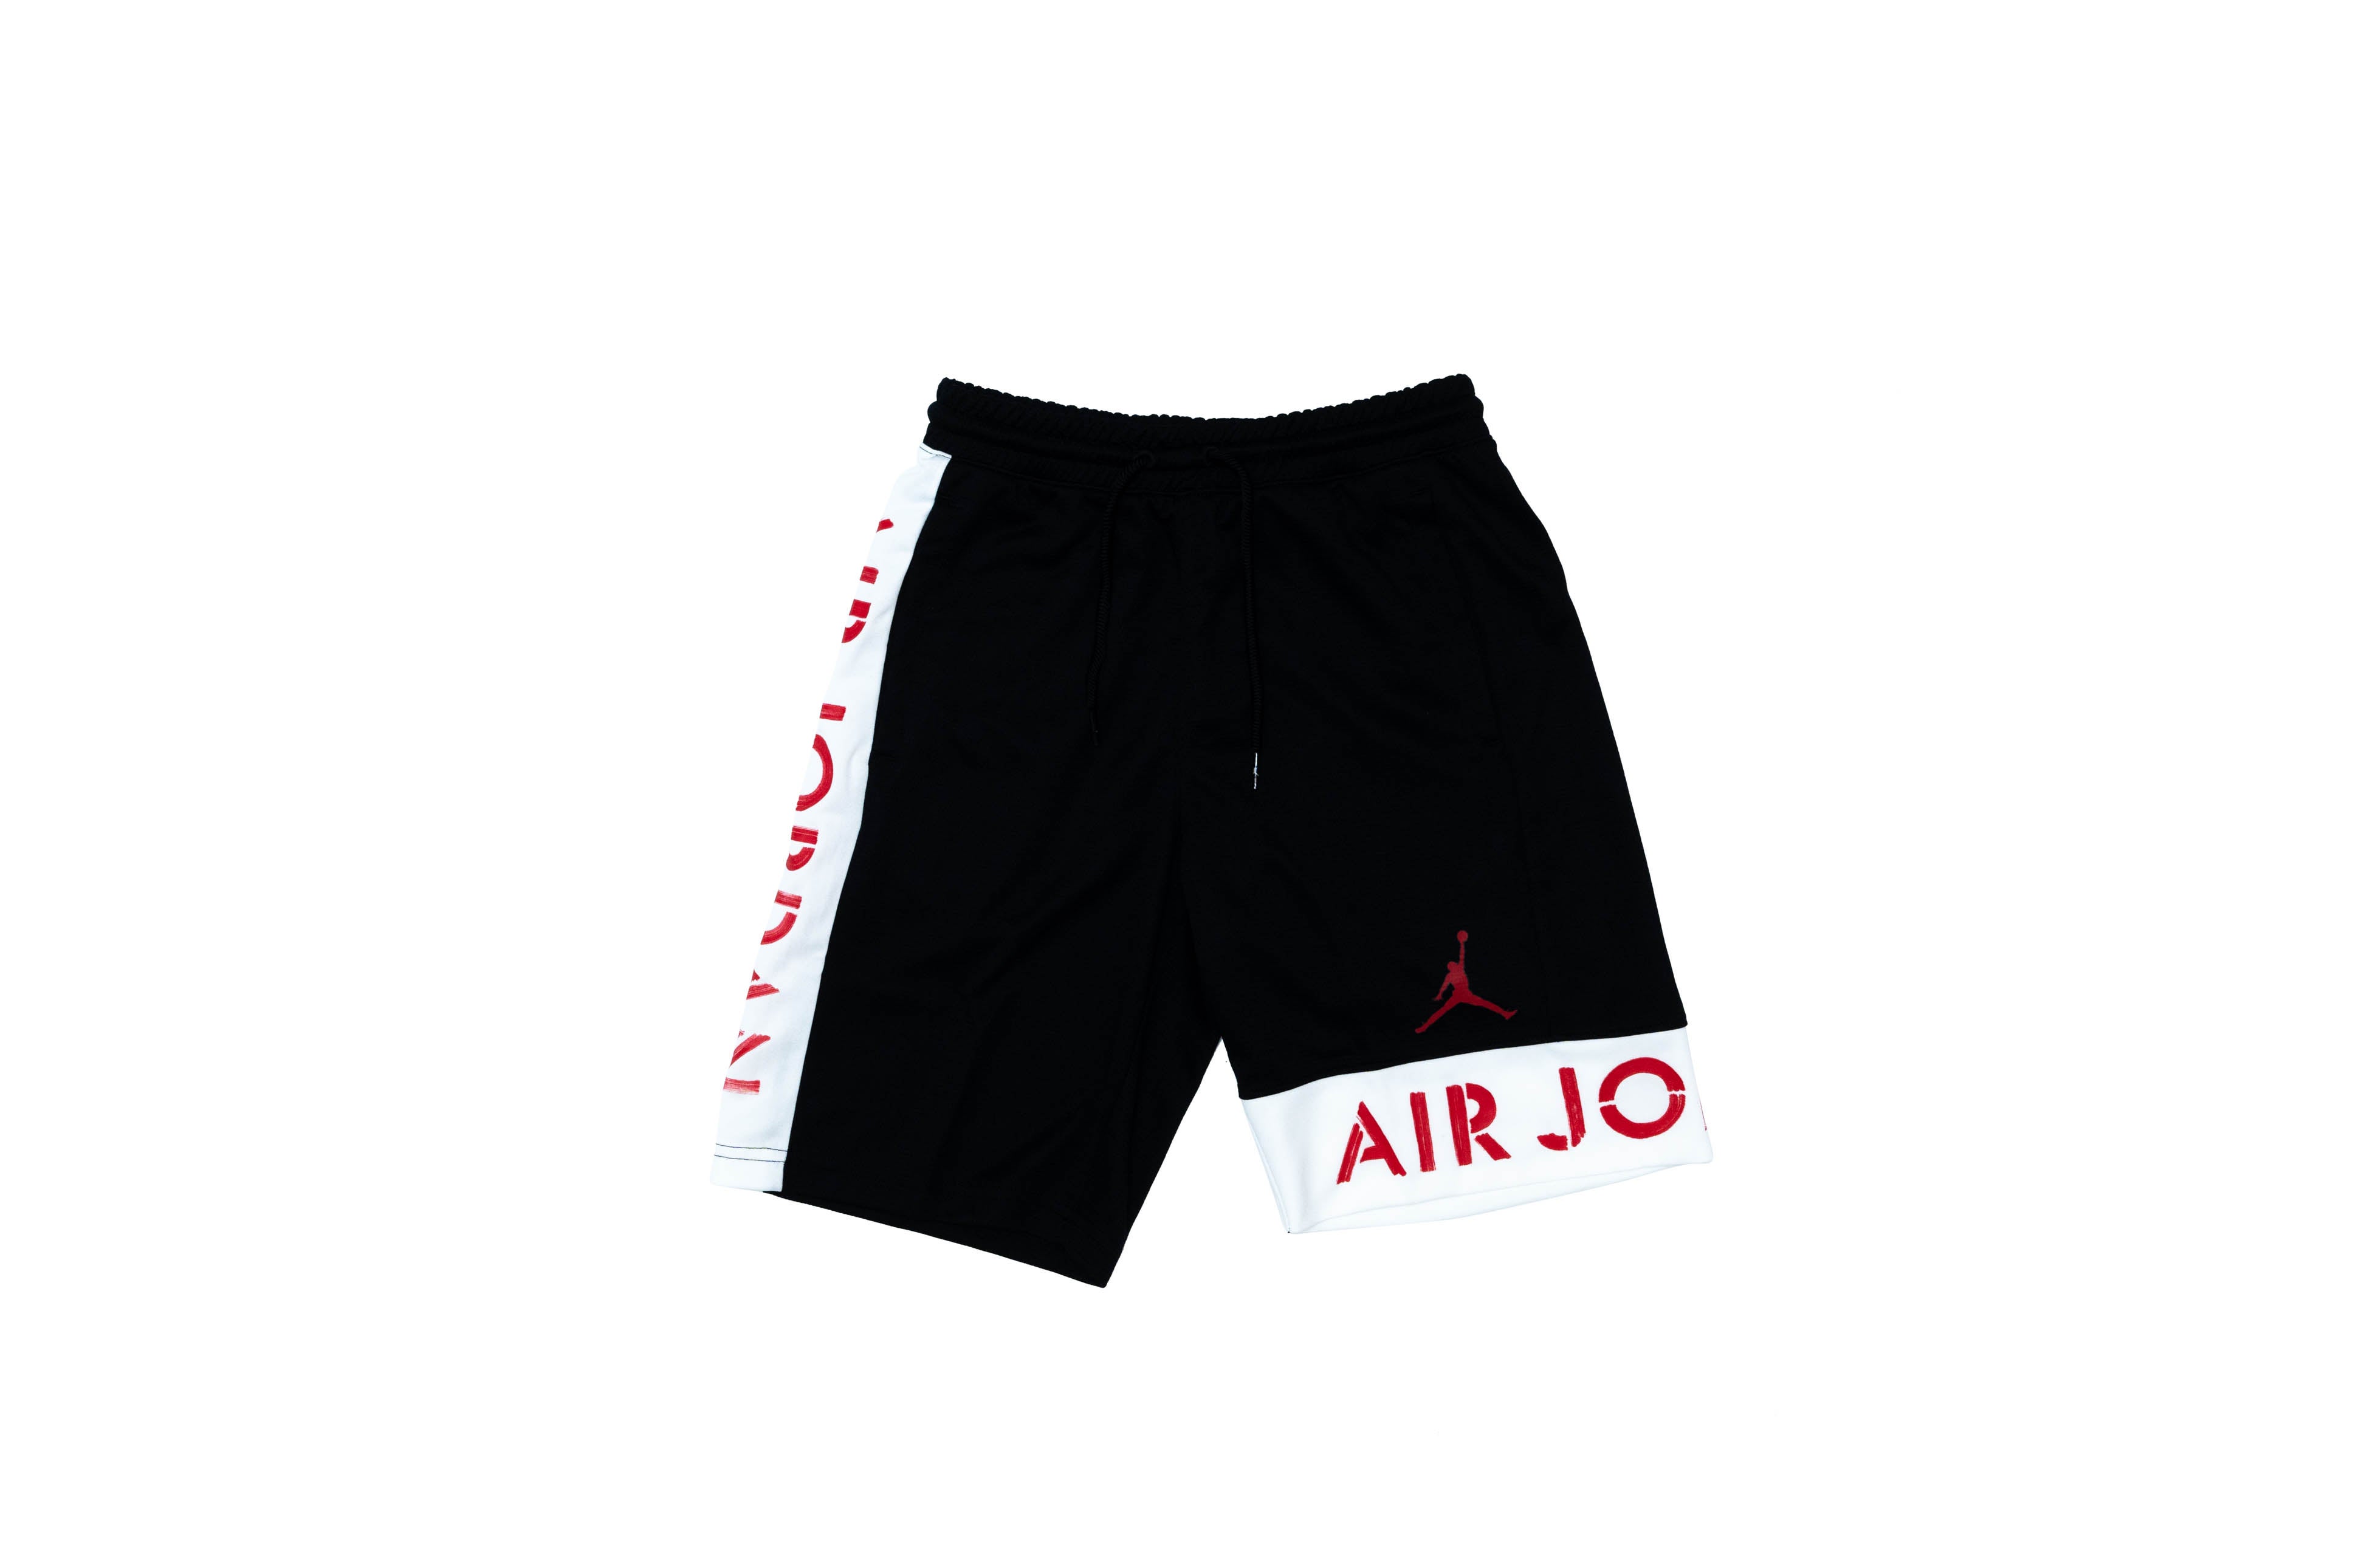 jumpman shorts